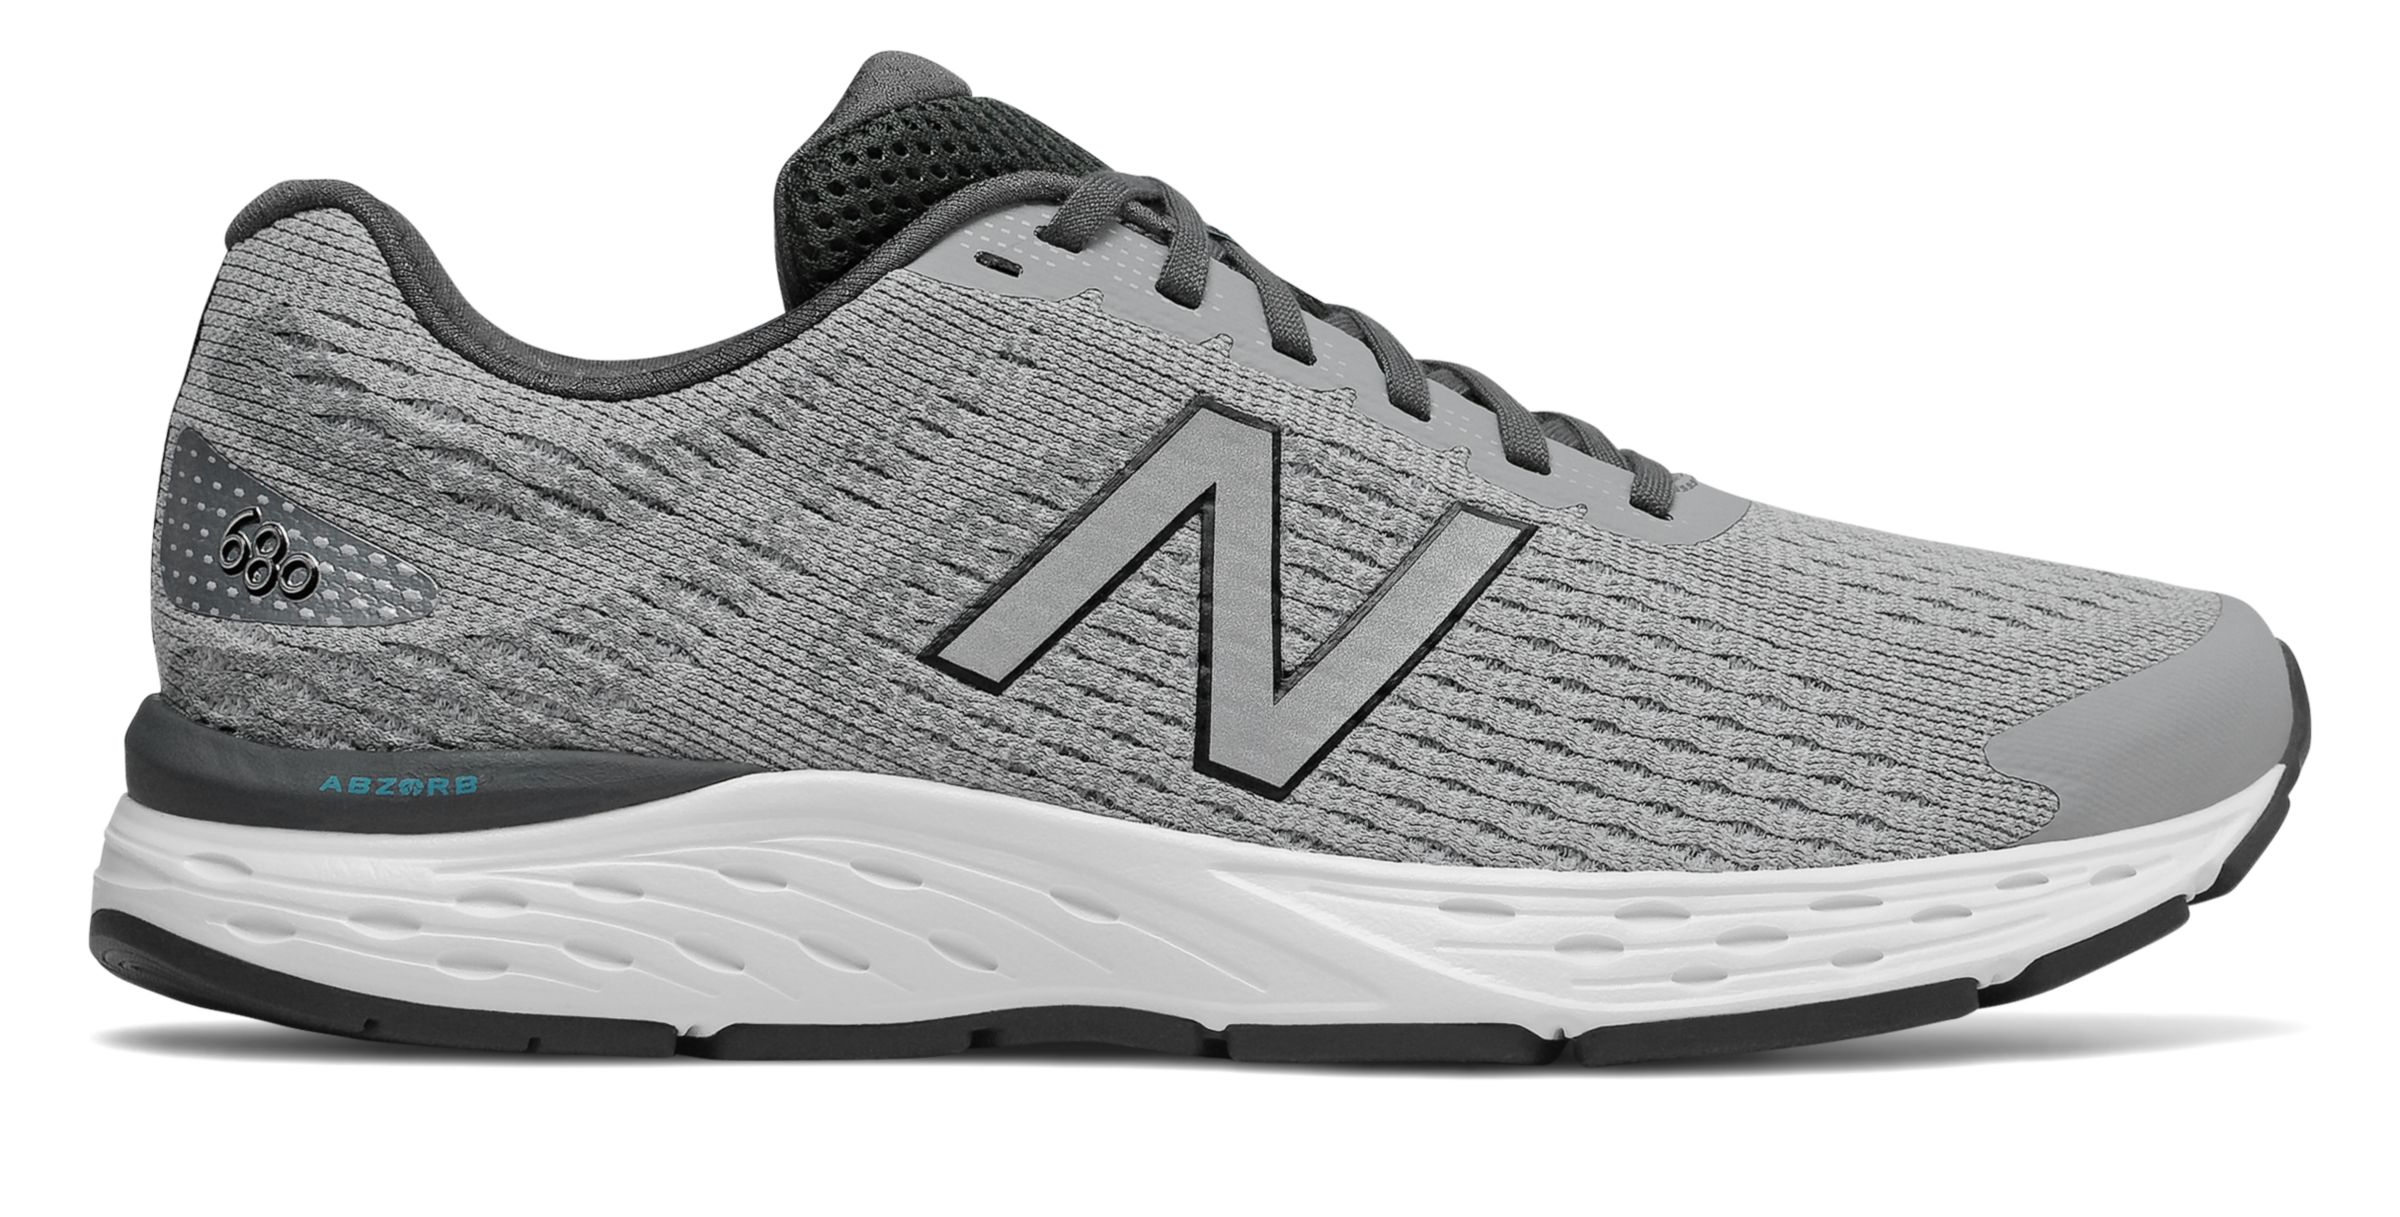 new balance mens m680 v6 neutral running shoes black